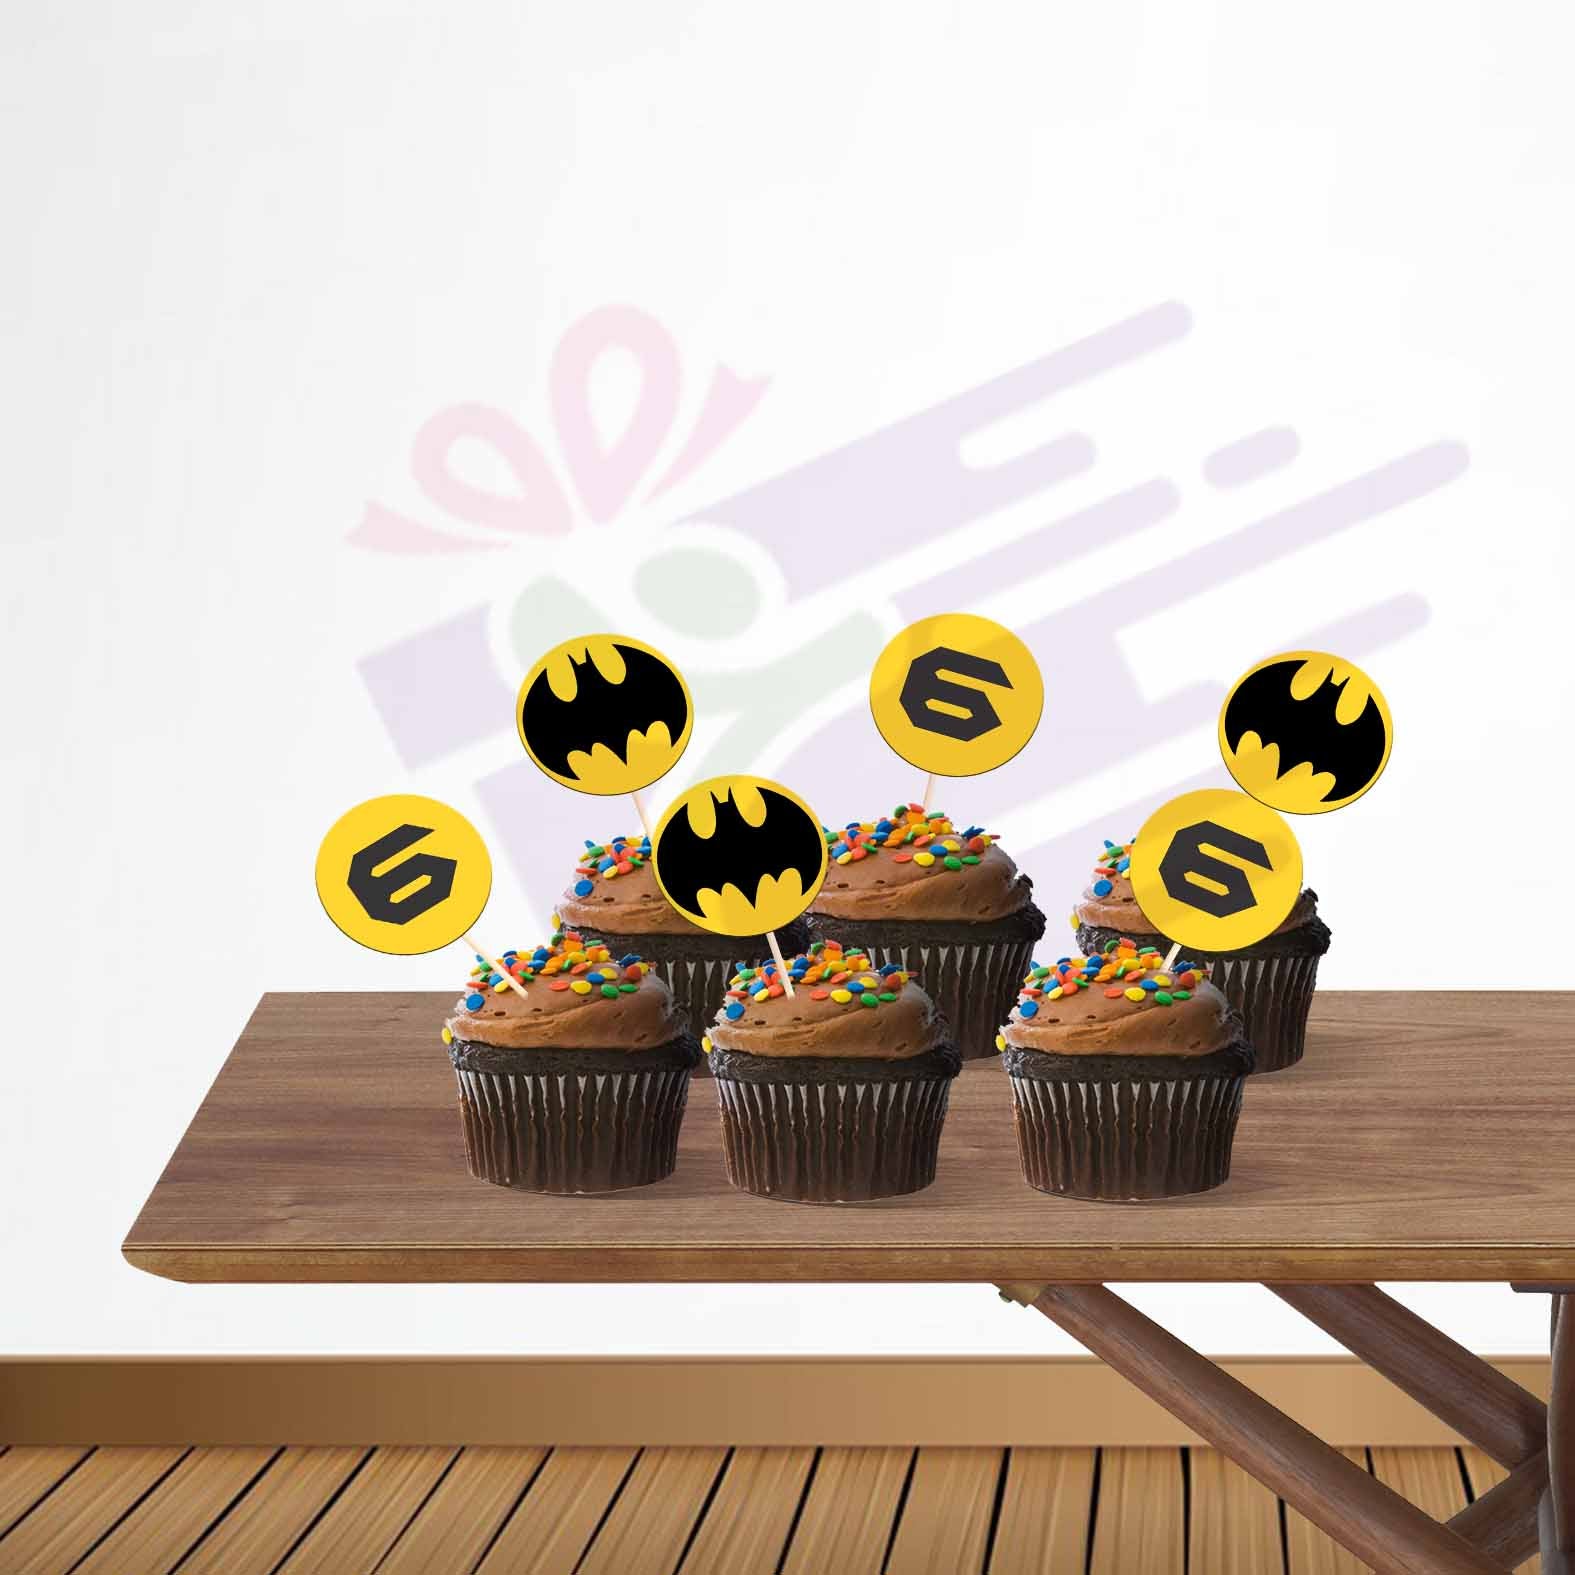 Lego batman cupcake stick – 5ouza3balat